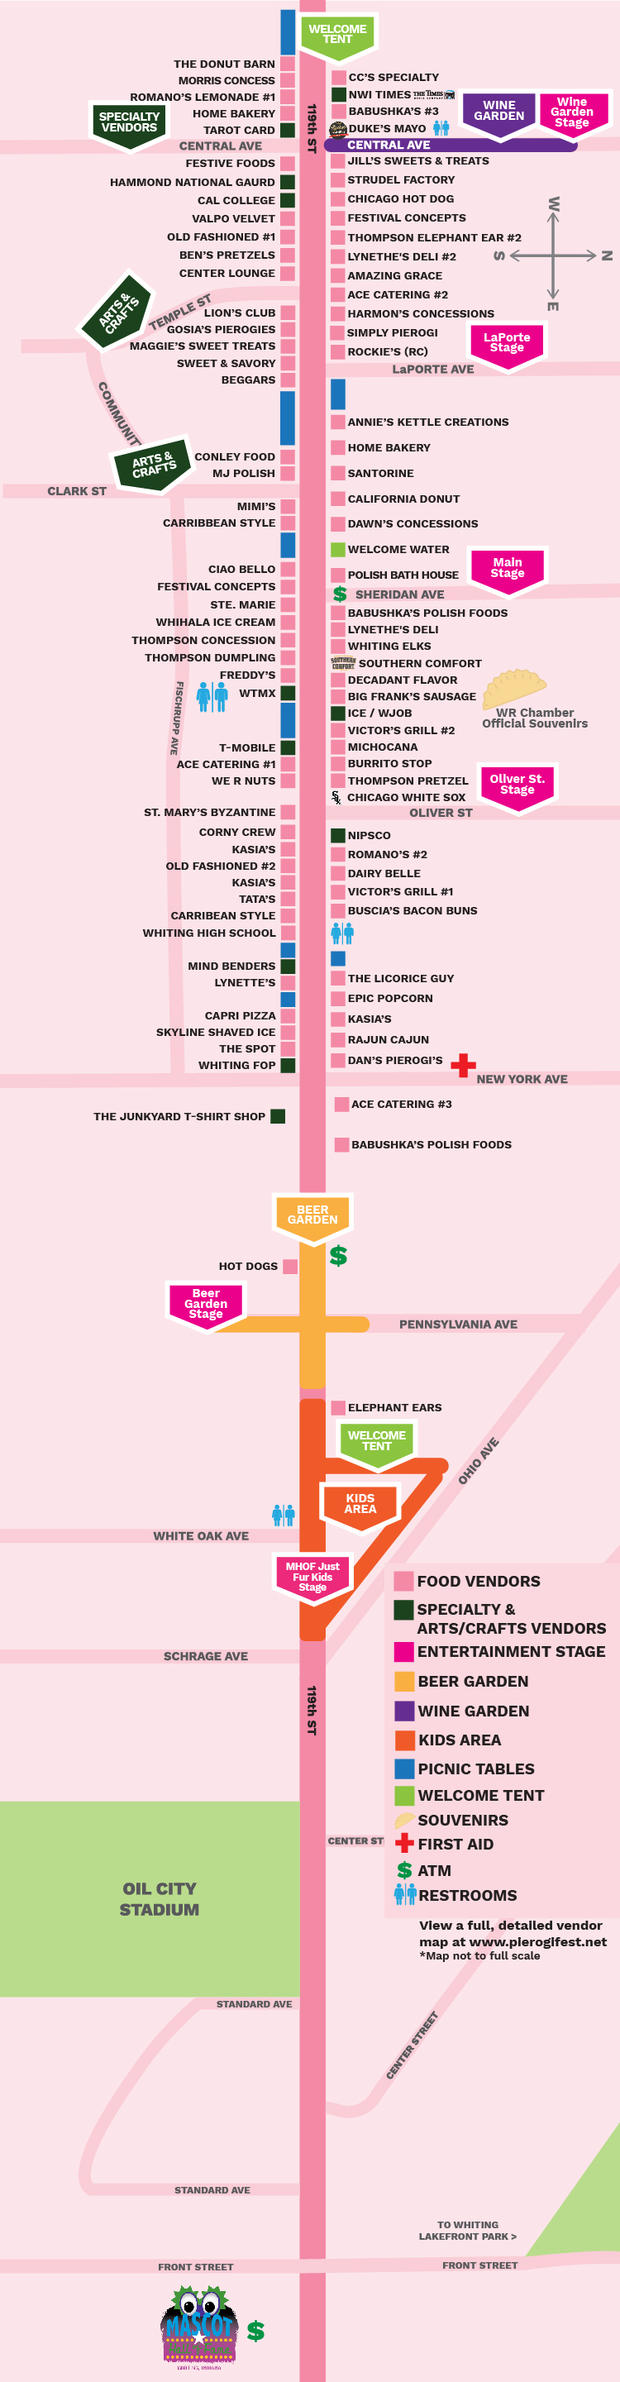 Pierogi Fest Map 